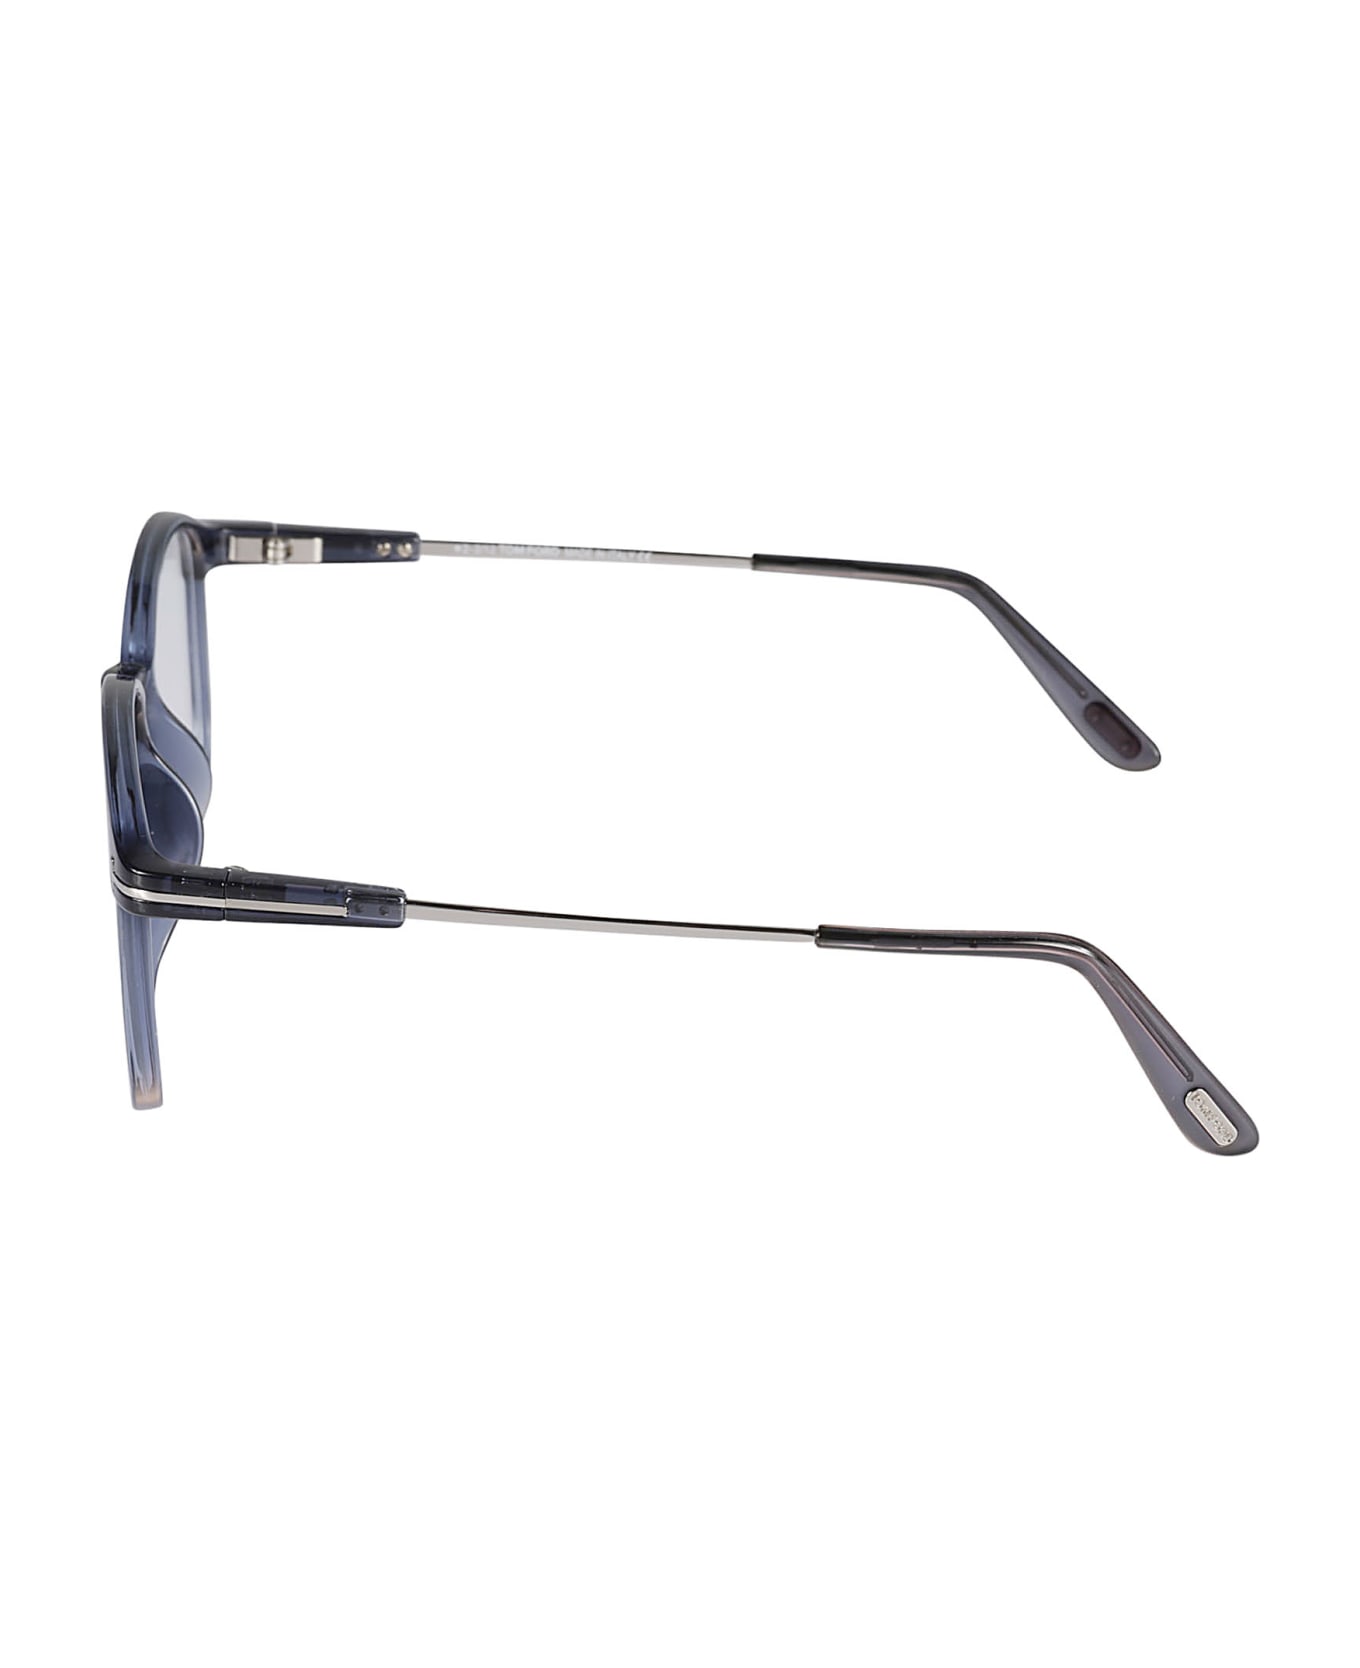 Tom Ford Eyewear Round Clear Lens Glasses - 090 アイウェア